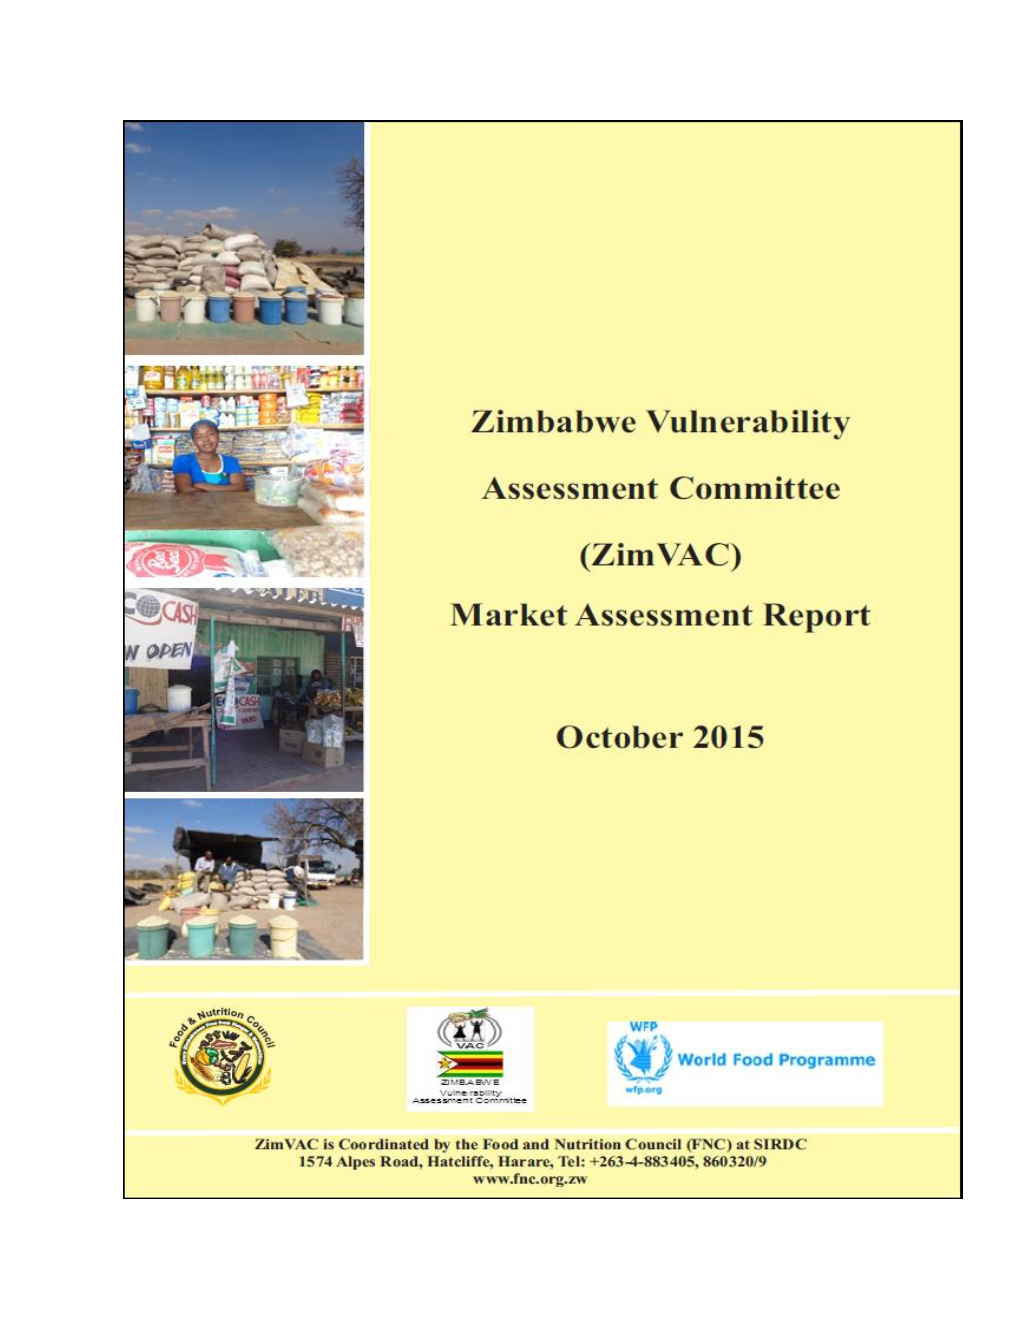 ZIMBABWE VULNERABILITY ASSESSMENT COMMITTEE (Zimvac)